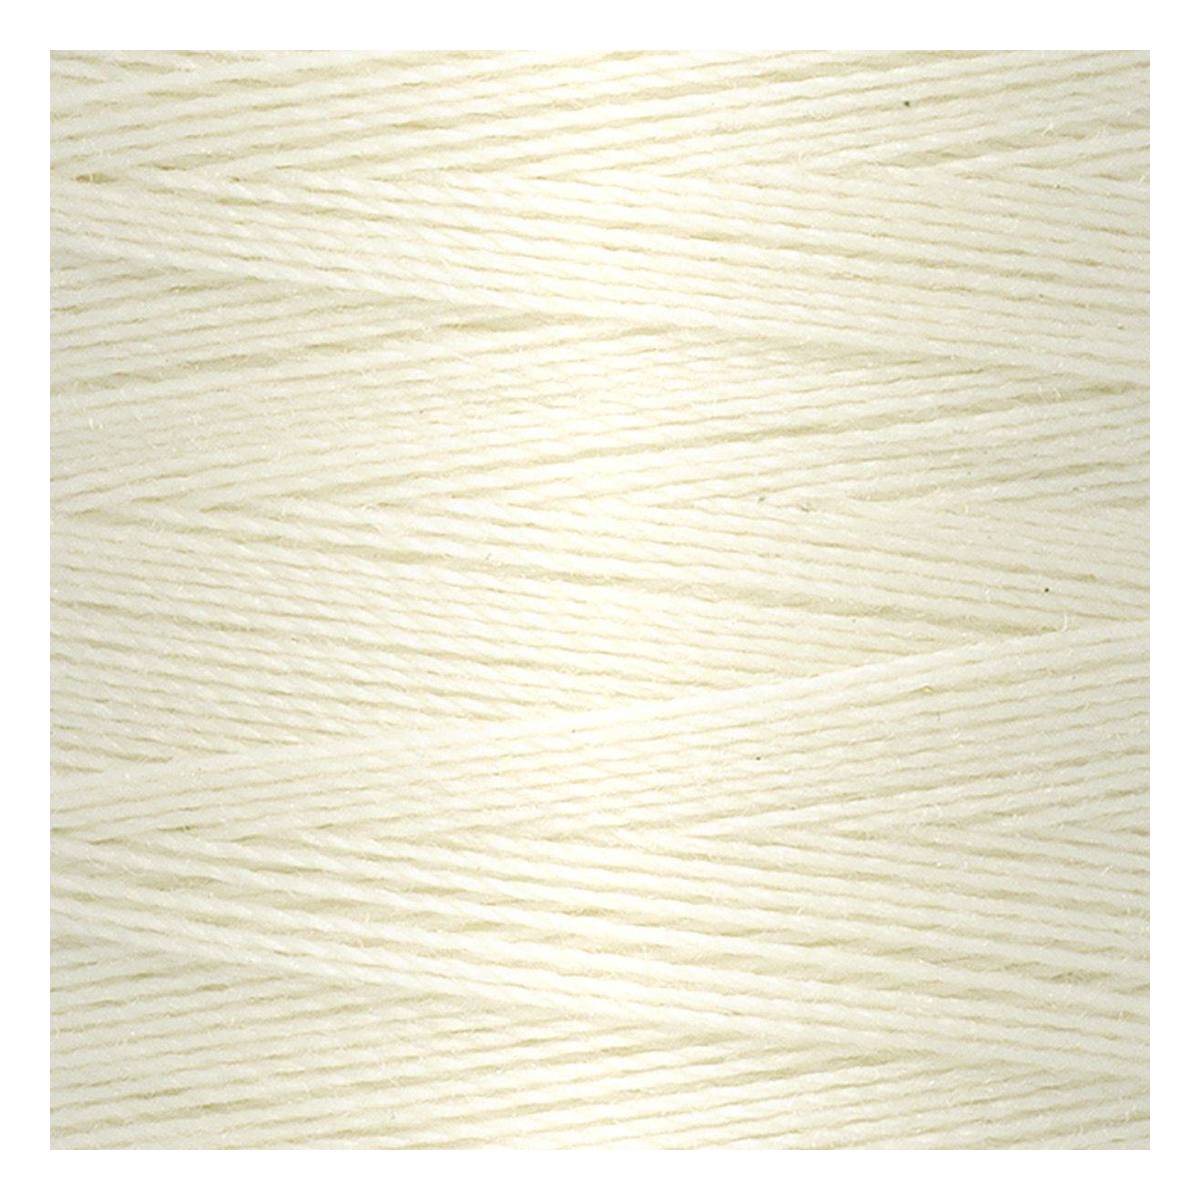 Gutermann White Sew All Thread 250m (1)